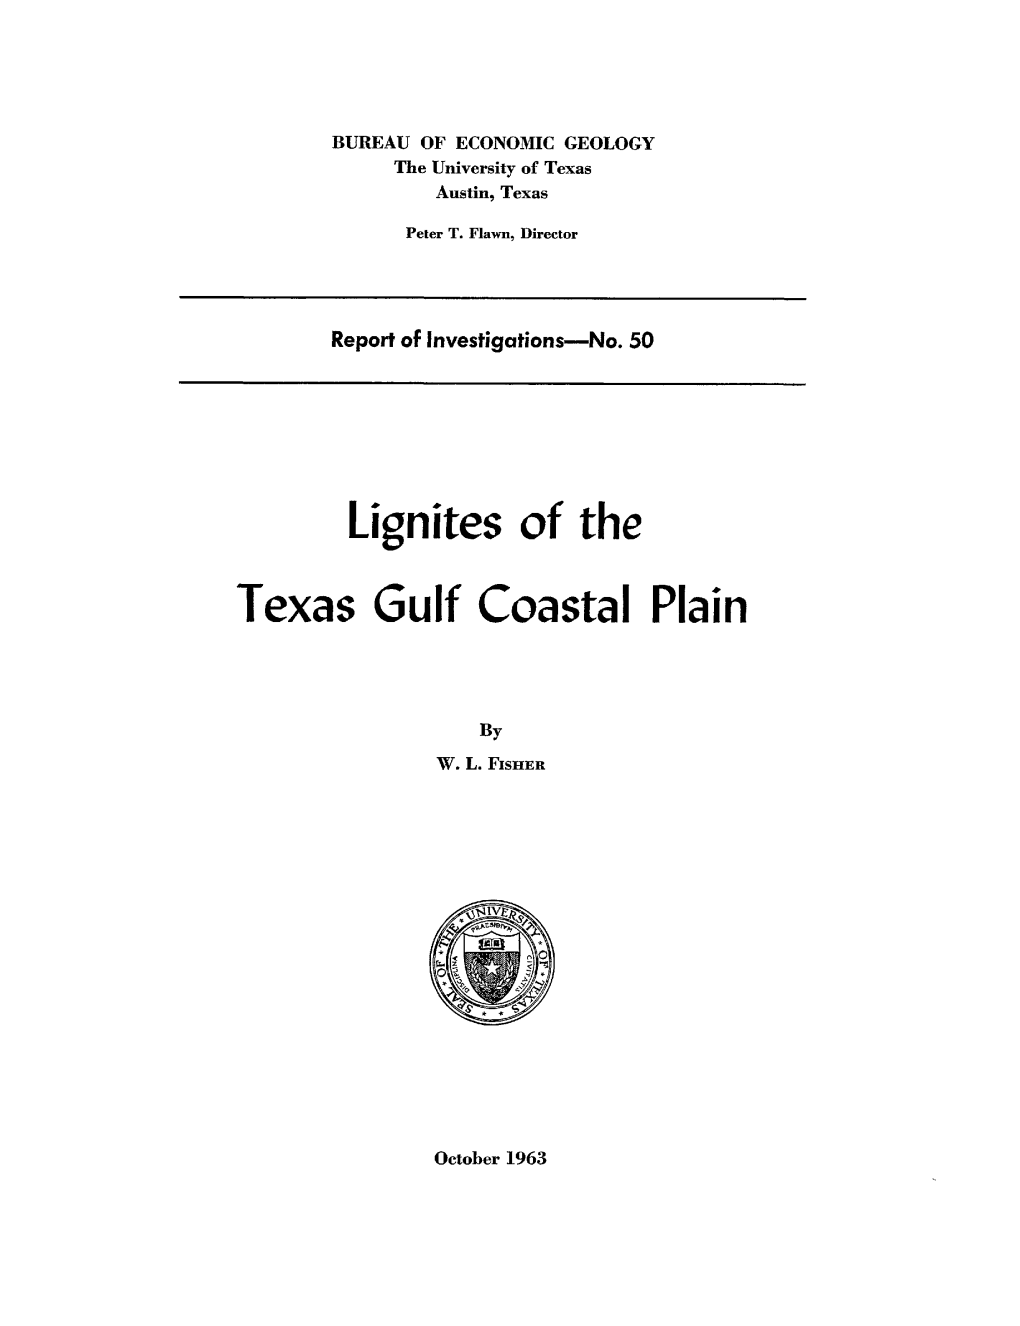 Lignites of the Texas Gulf Coastal Plain